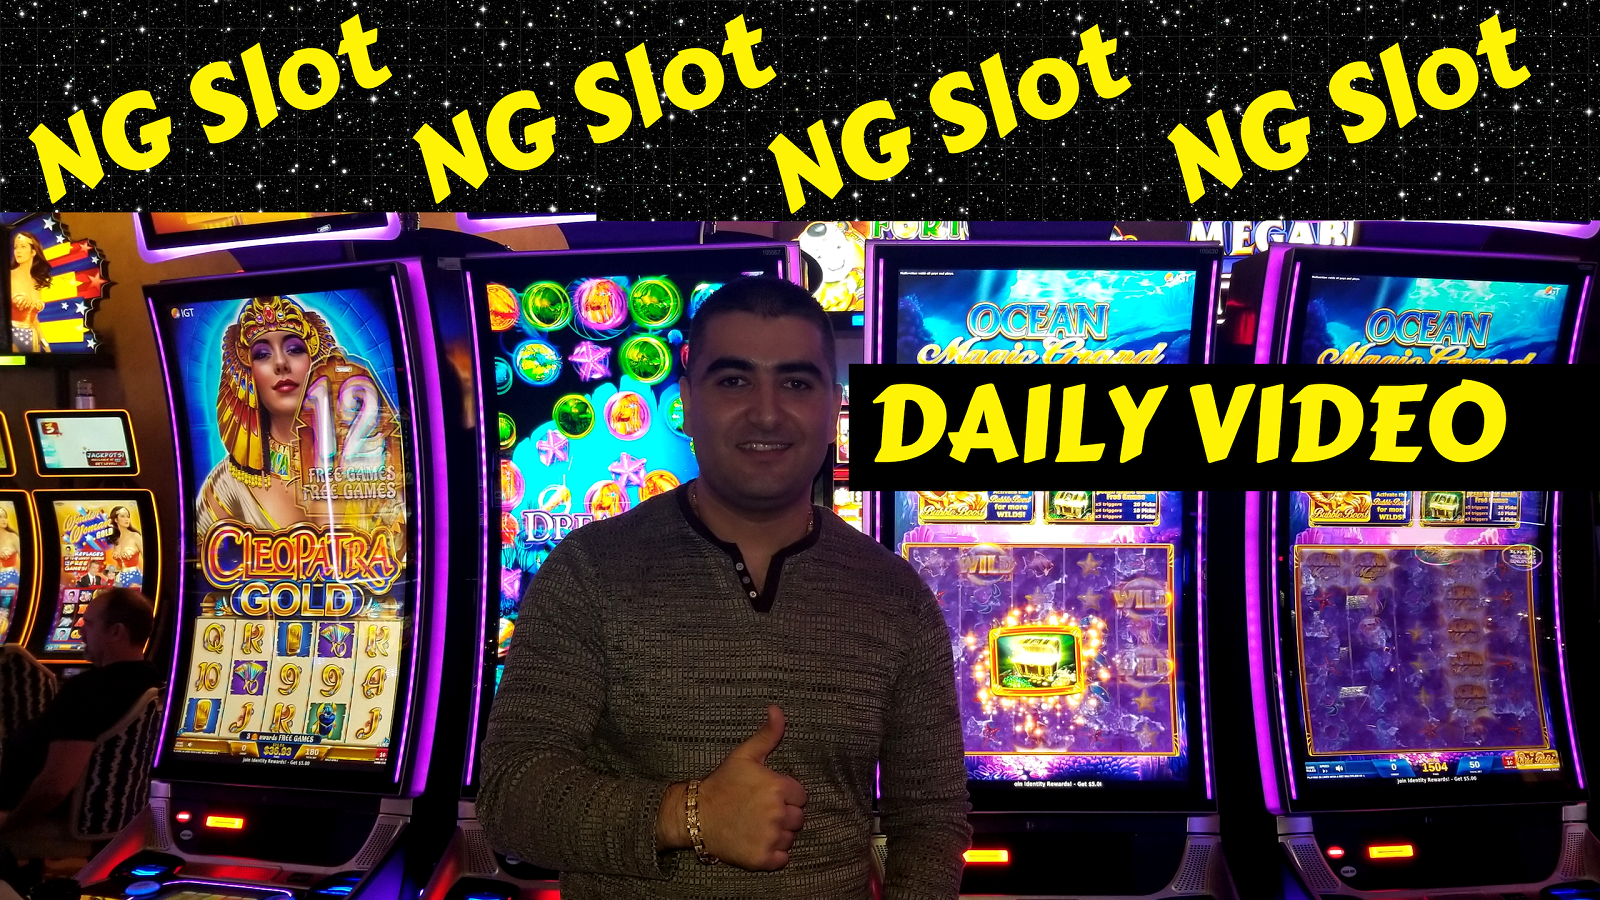 How to Win Slot Machines – Win Slot Machines Las Vegas Successfully